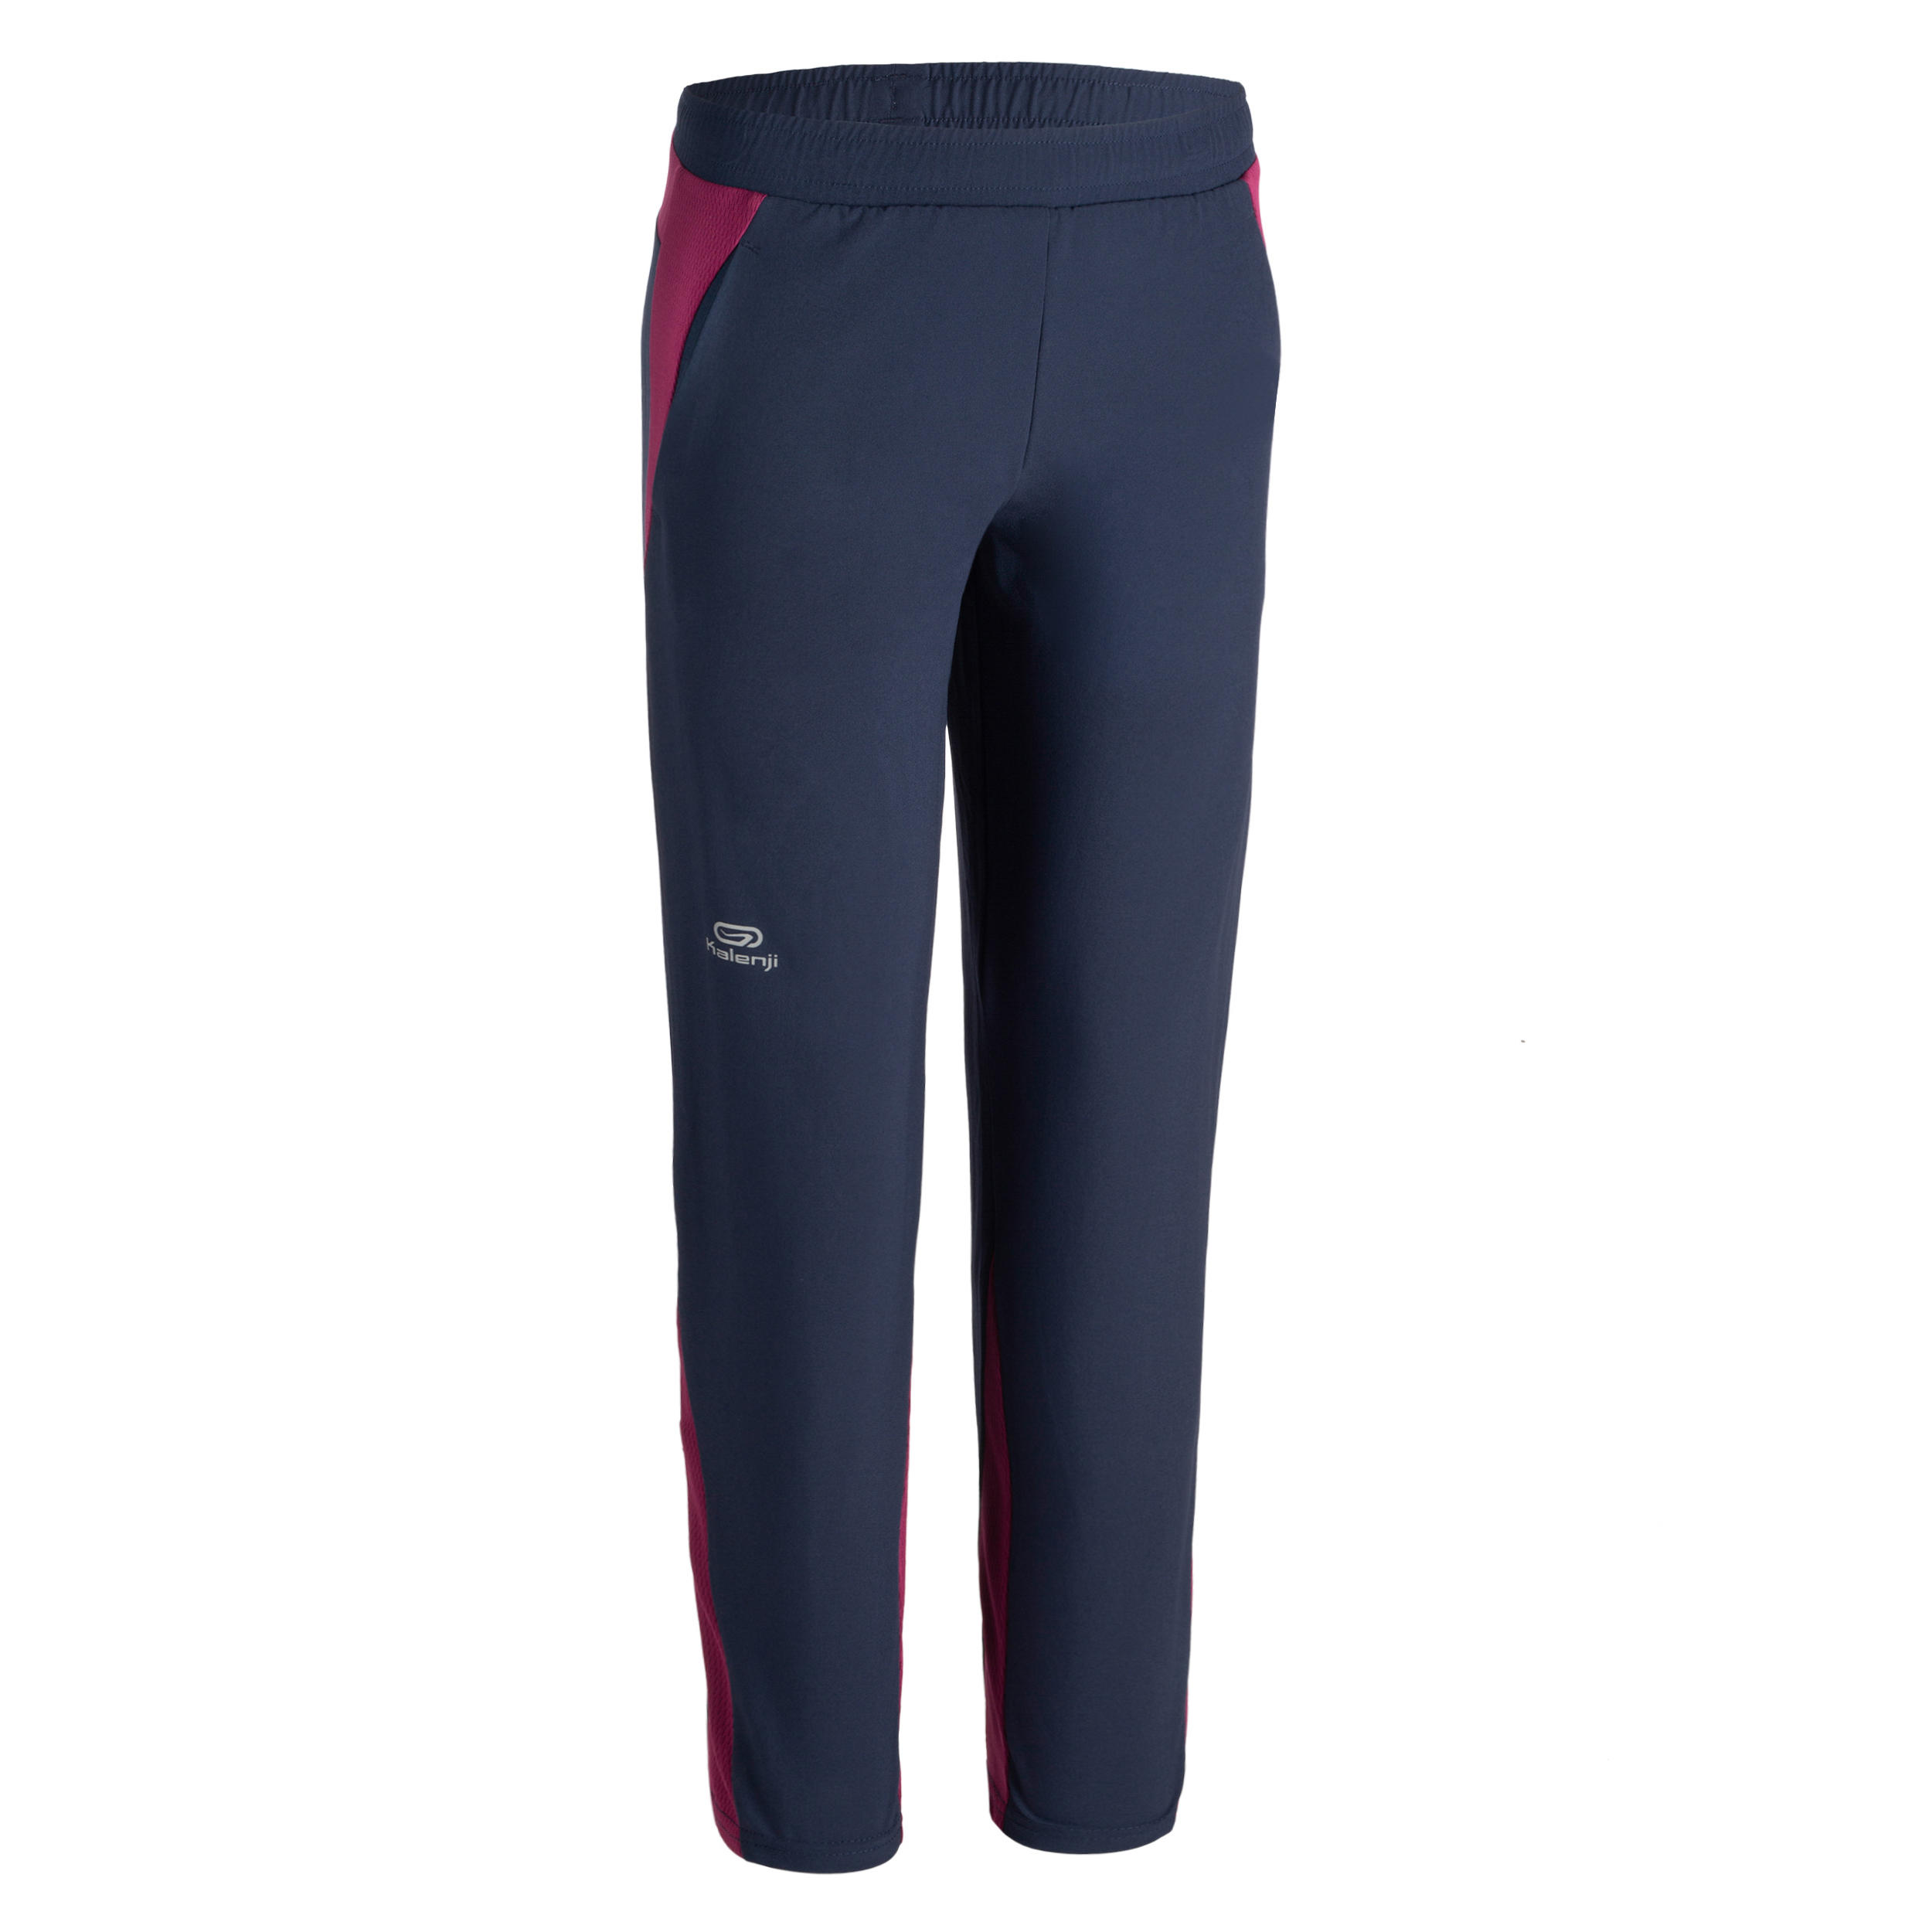 Kalenji Ladies Crop Trousers Bottoms Gym Yoga Sport Cycling Size UK 8 EU S  | eBay